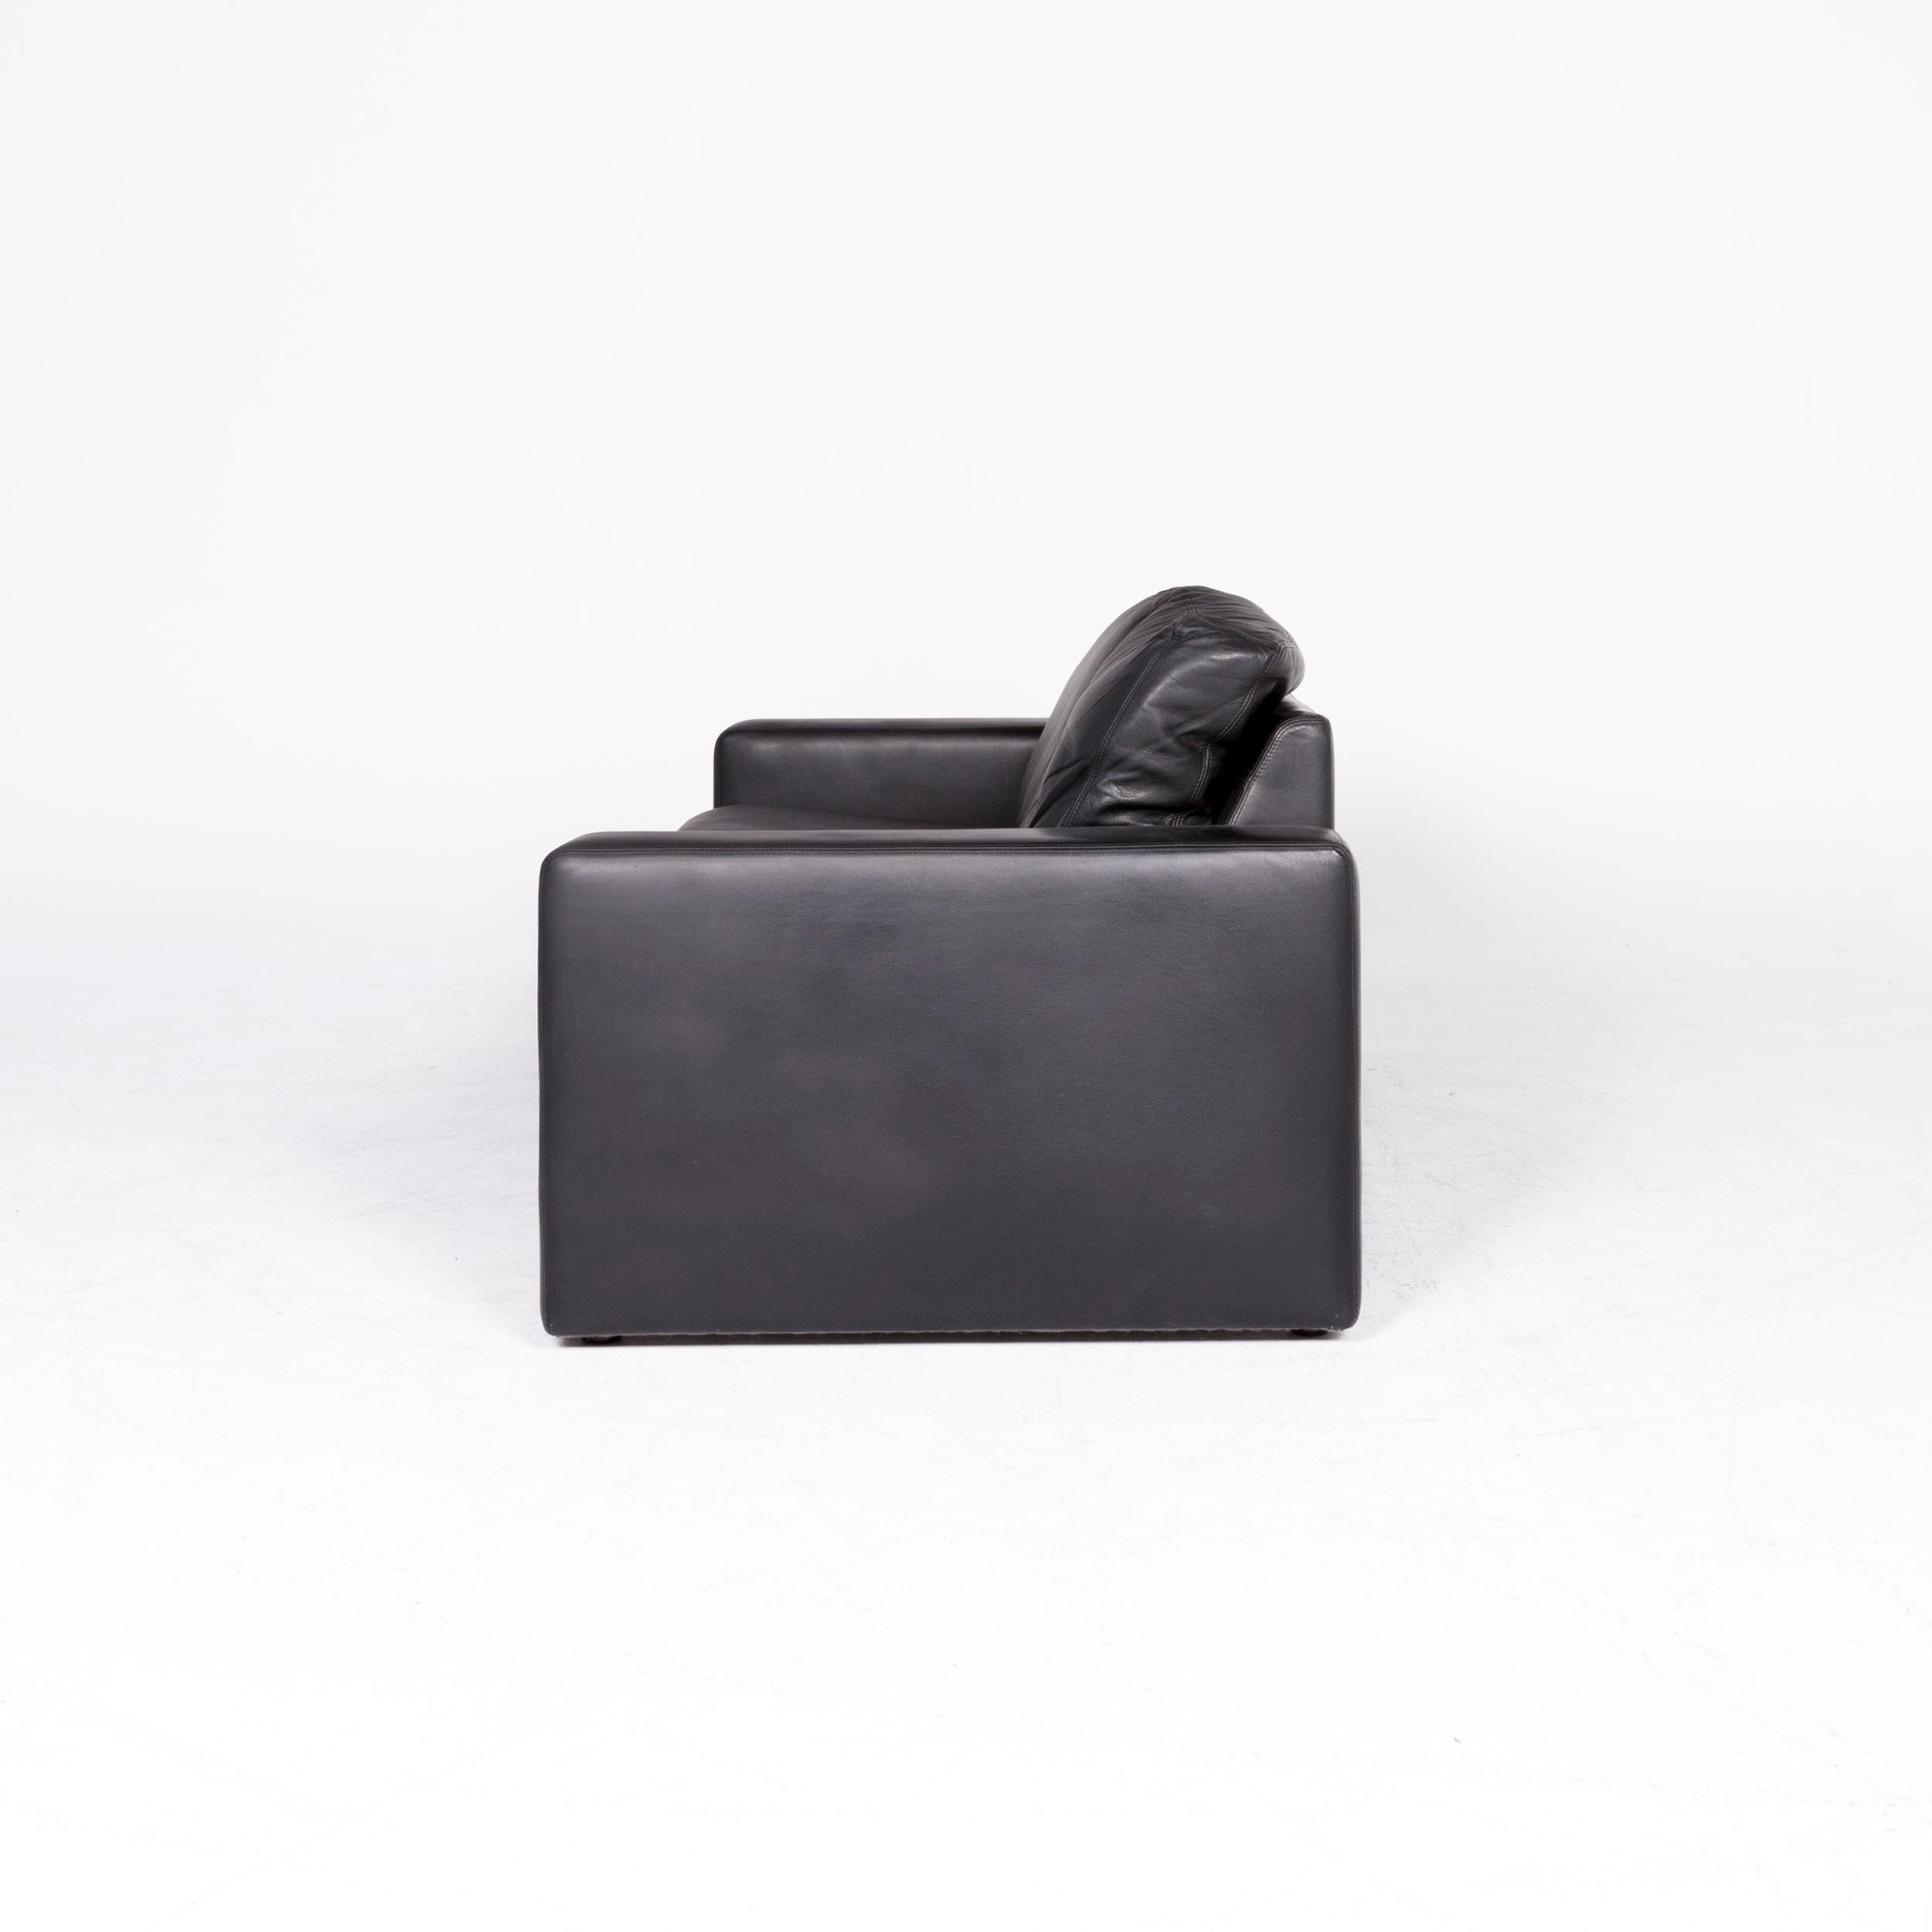 Schröno Designer Leather Sofa Black Genuine Leather Two-Seat Couch 1